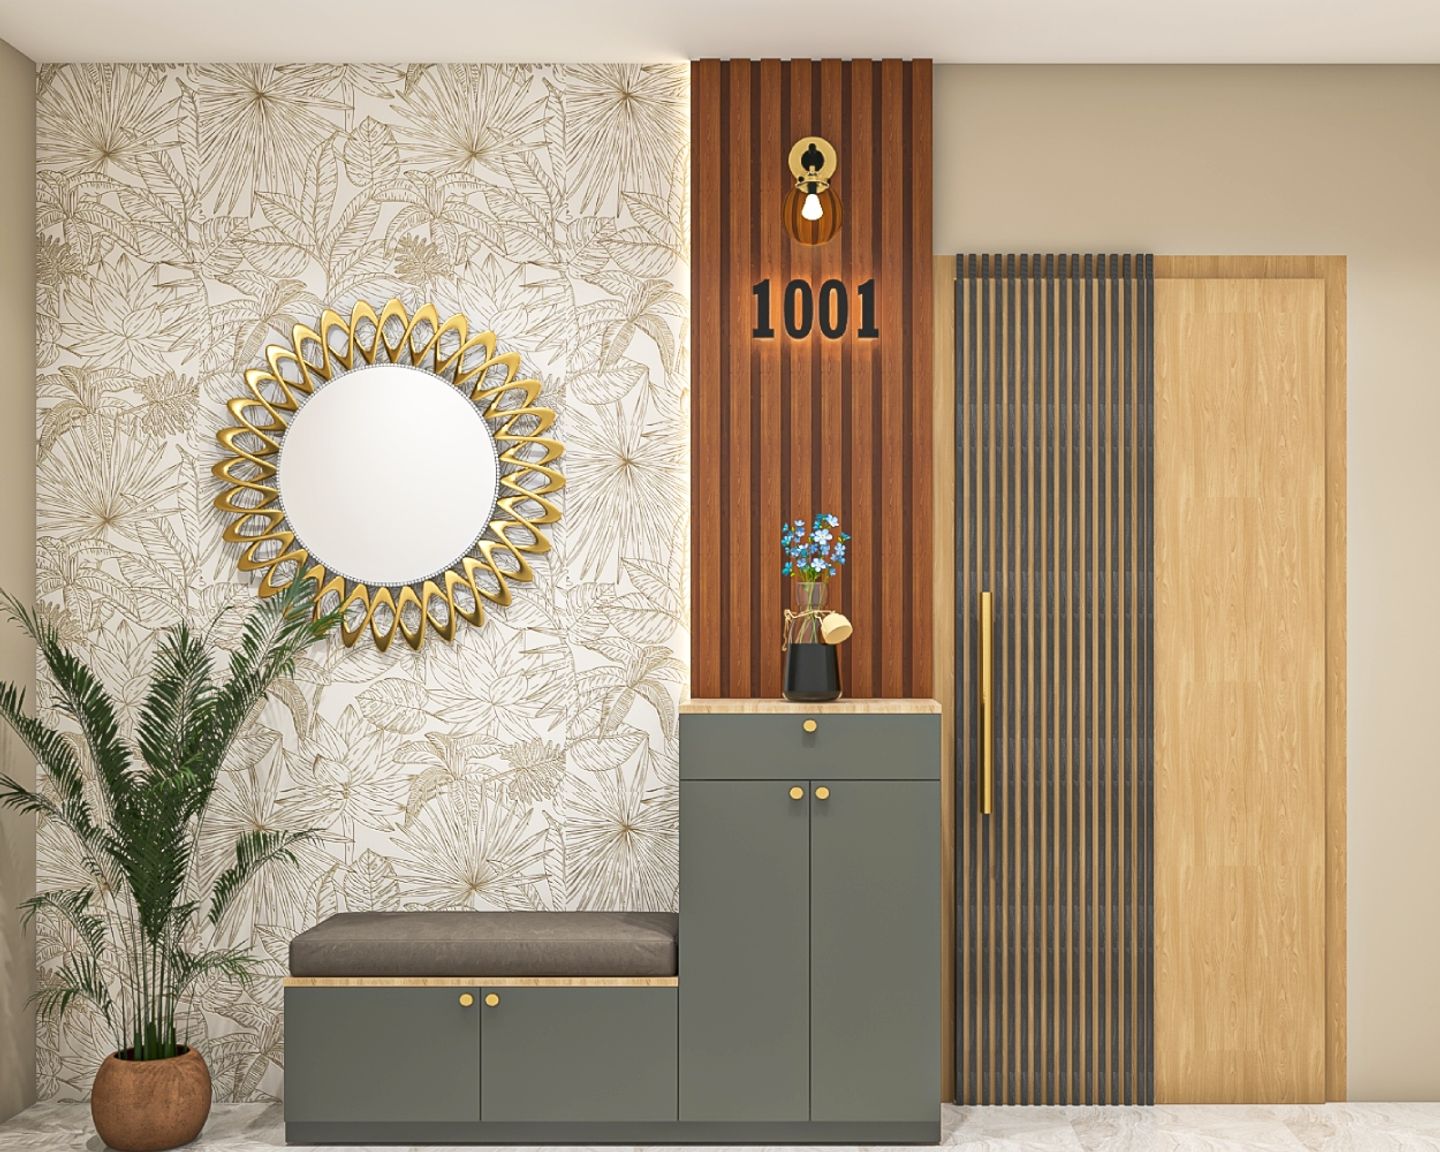 Foyer Design With Leafy Wallpaper - Livspace